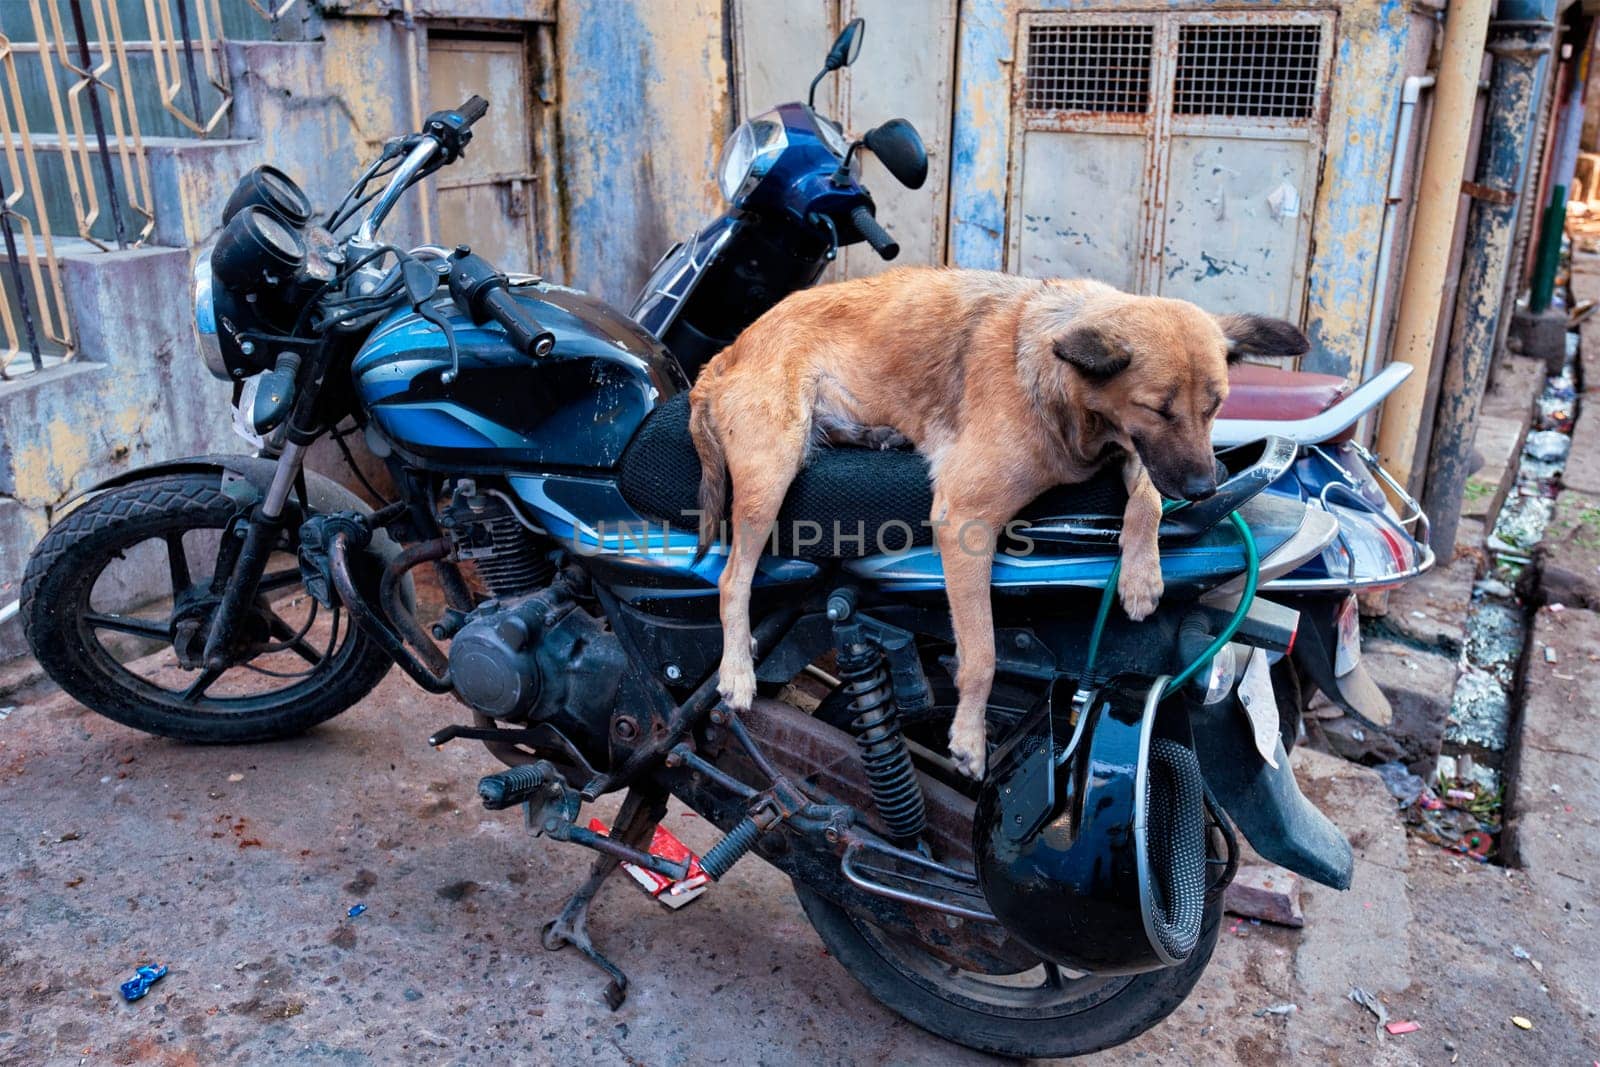 Dog sleeping on motorcycle in indian street. Jodhpur, Rajasthan, India